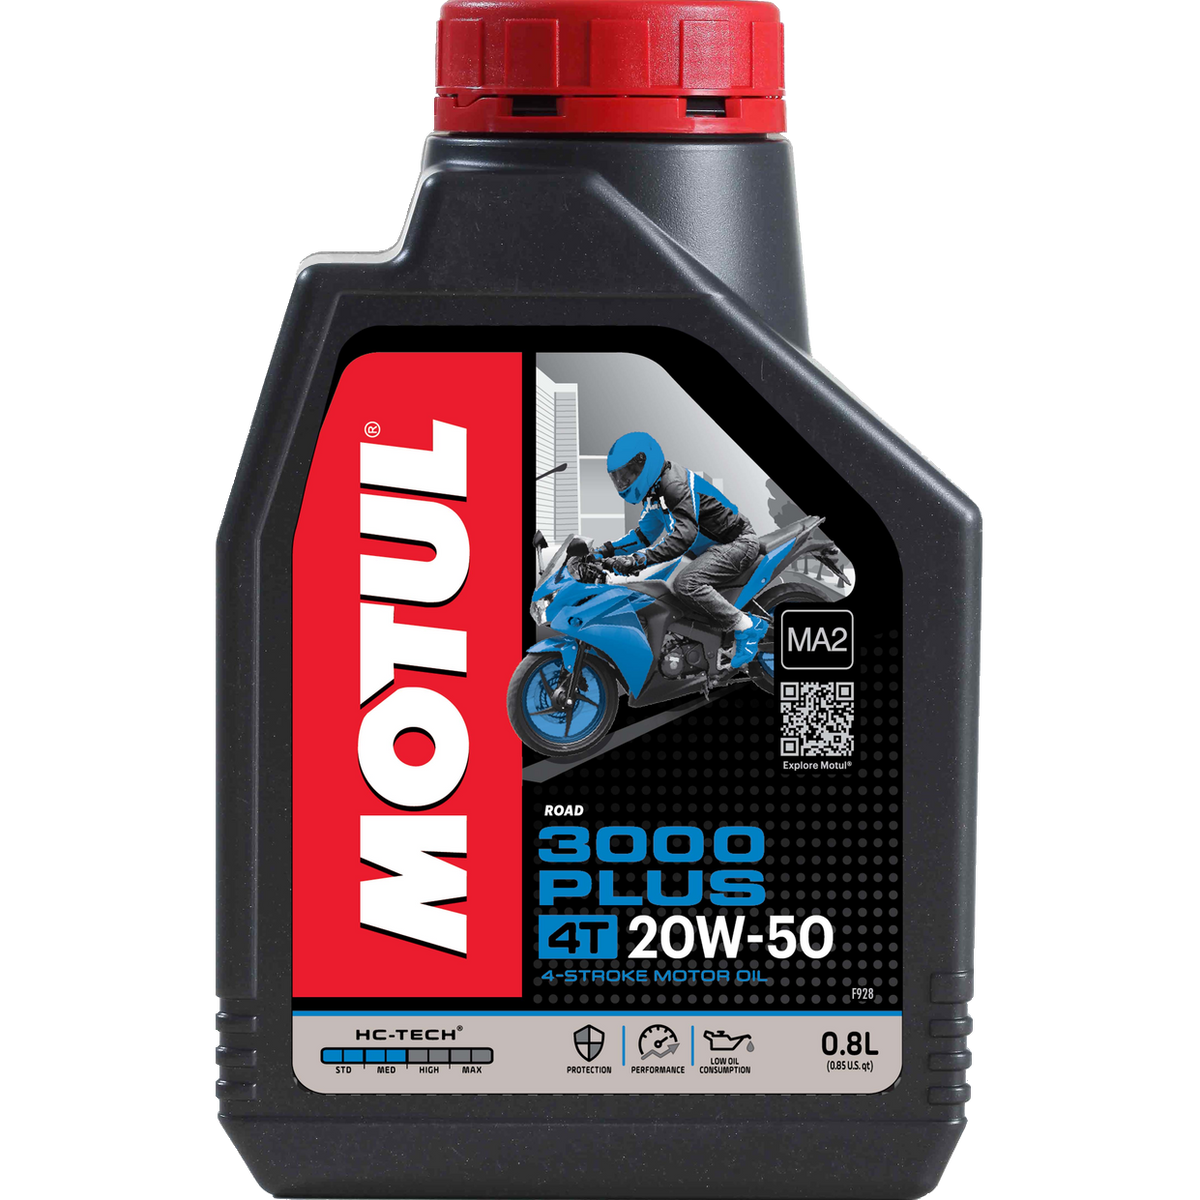 Motul 3000 Plus Mineral 20W50 4T 1L Bottle – Ural Japan Online Shop